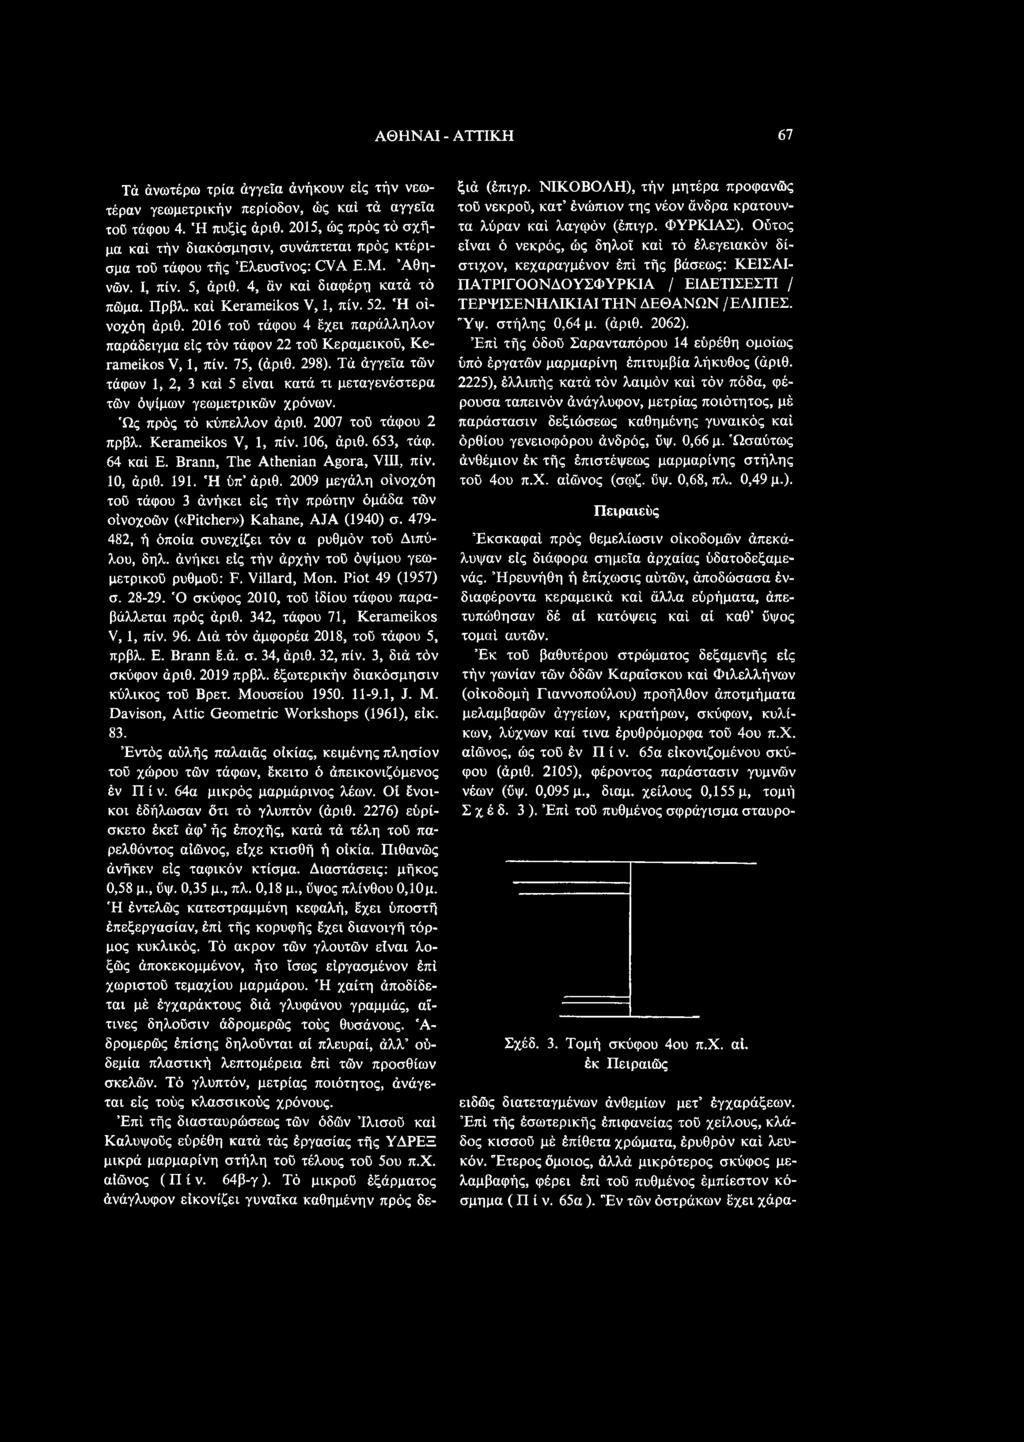 Brann, The Athenian Agora, VIII, πίν. 10, άριθ. 191. Ή ύπ άριθ. 2009 μεγάλη οίνοχόη τοϋ τάφου 3 άνήκει είς τήν πρώτην όμάδα τών οίνοχοών («Pitcher») Kahane, AJA (1940) σ.